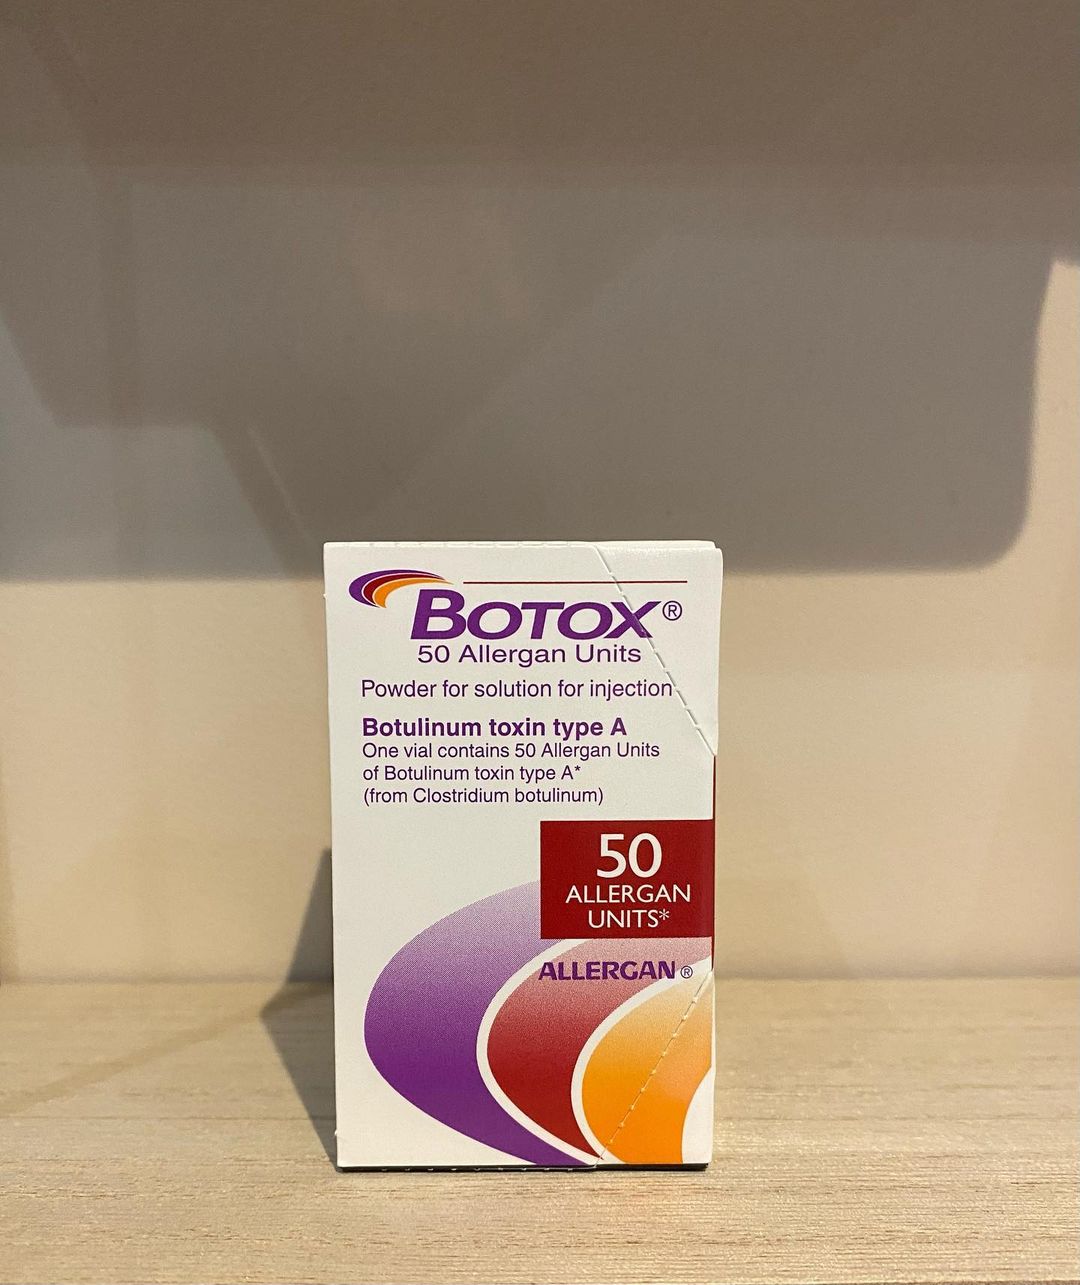 Box of 50 Botox units by Allergan